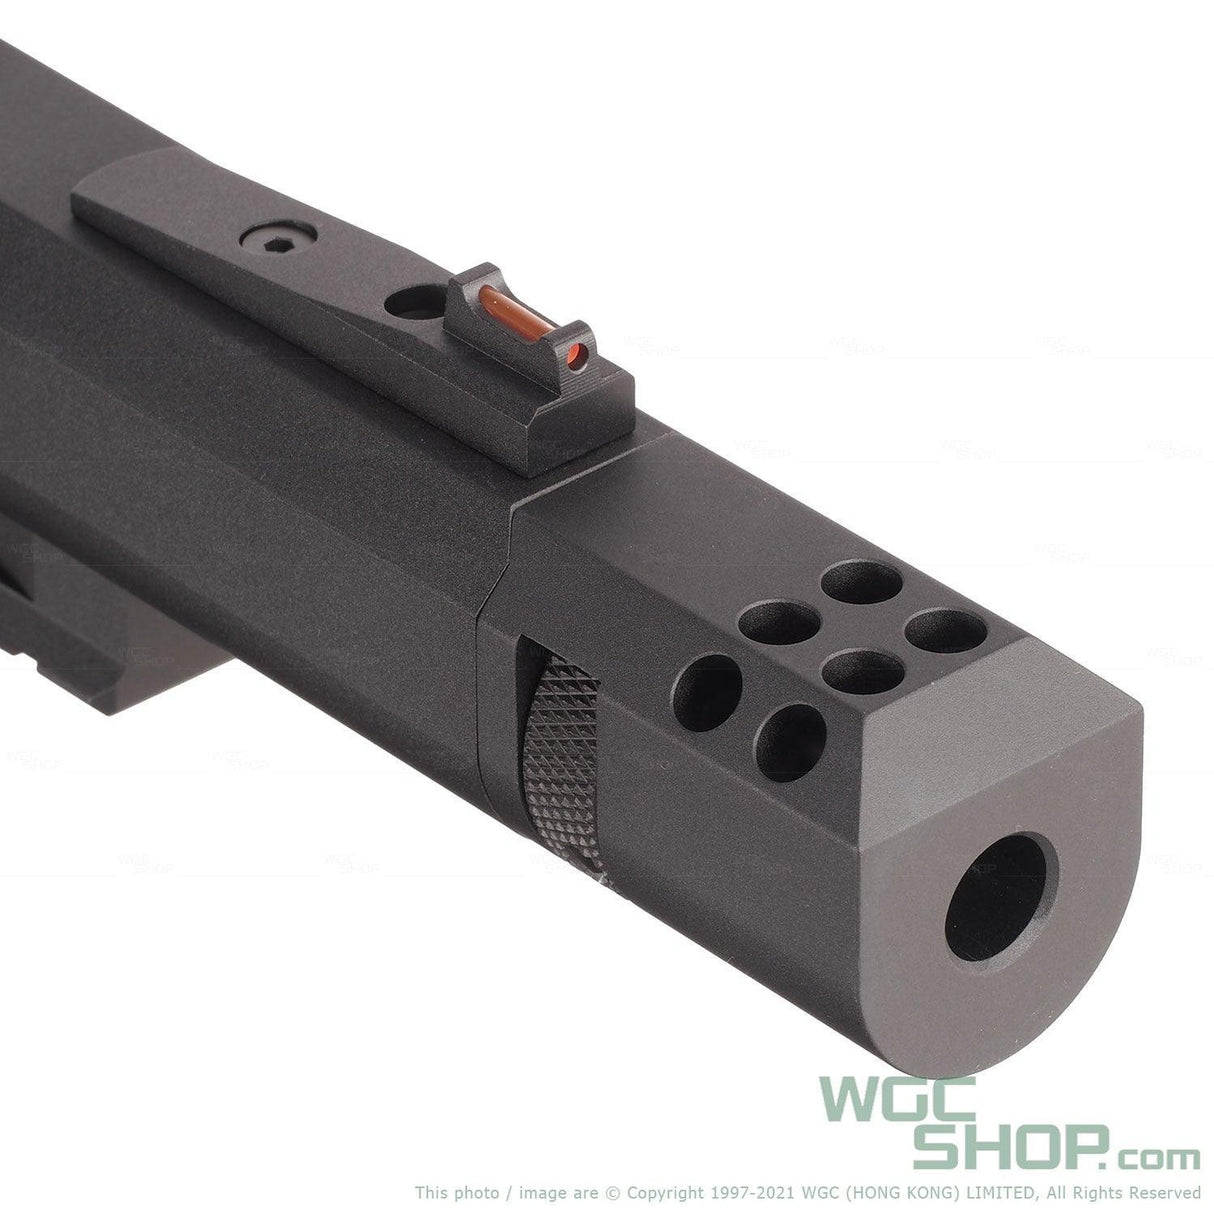 TTI AIRSOFT AAP01 Scorpion Upper Receiver Kit - 6 Inch - WGC Shop